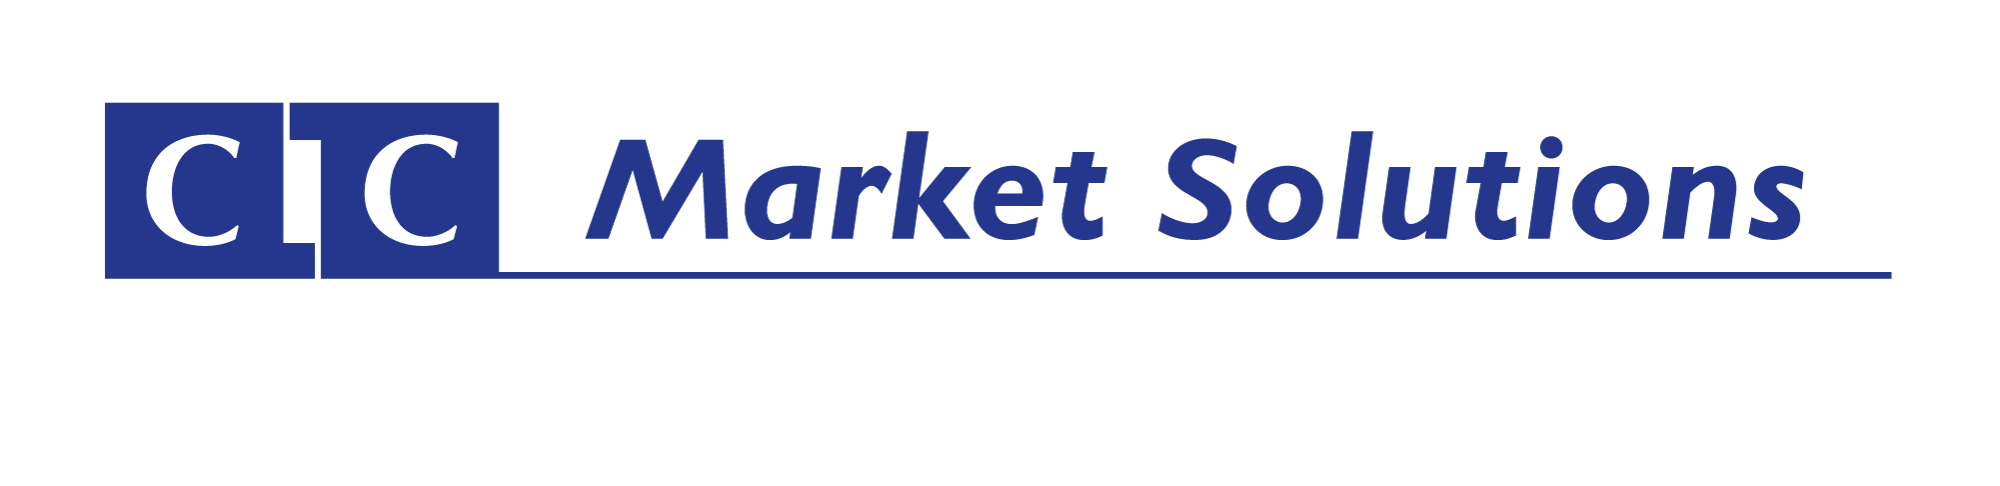 CIC Market Solutions logo